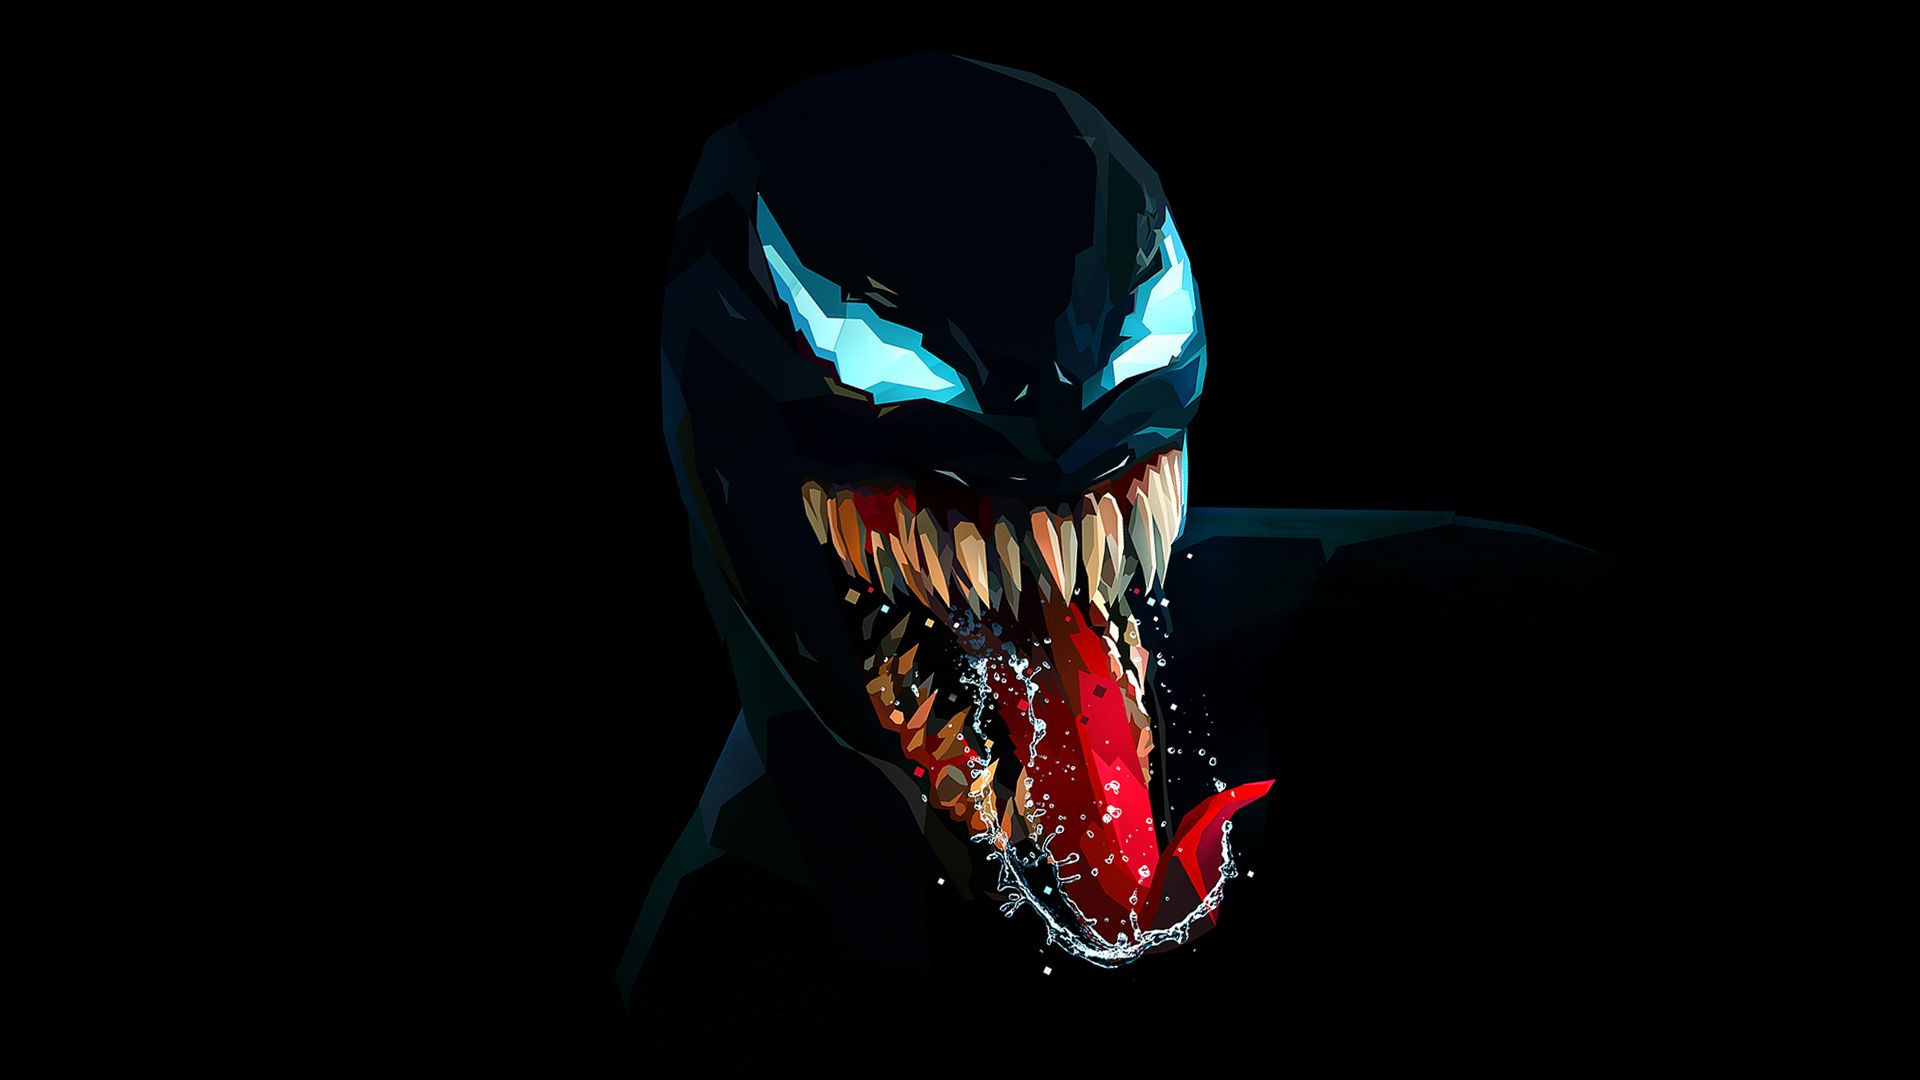 Venom Character Wallpaper with Dark Background Wallpaper. Wallpaper Download. High Resolution Wallpaper